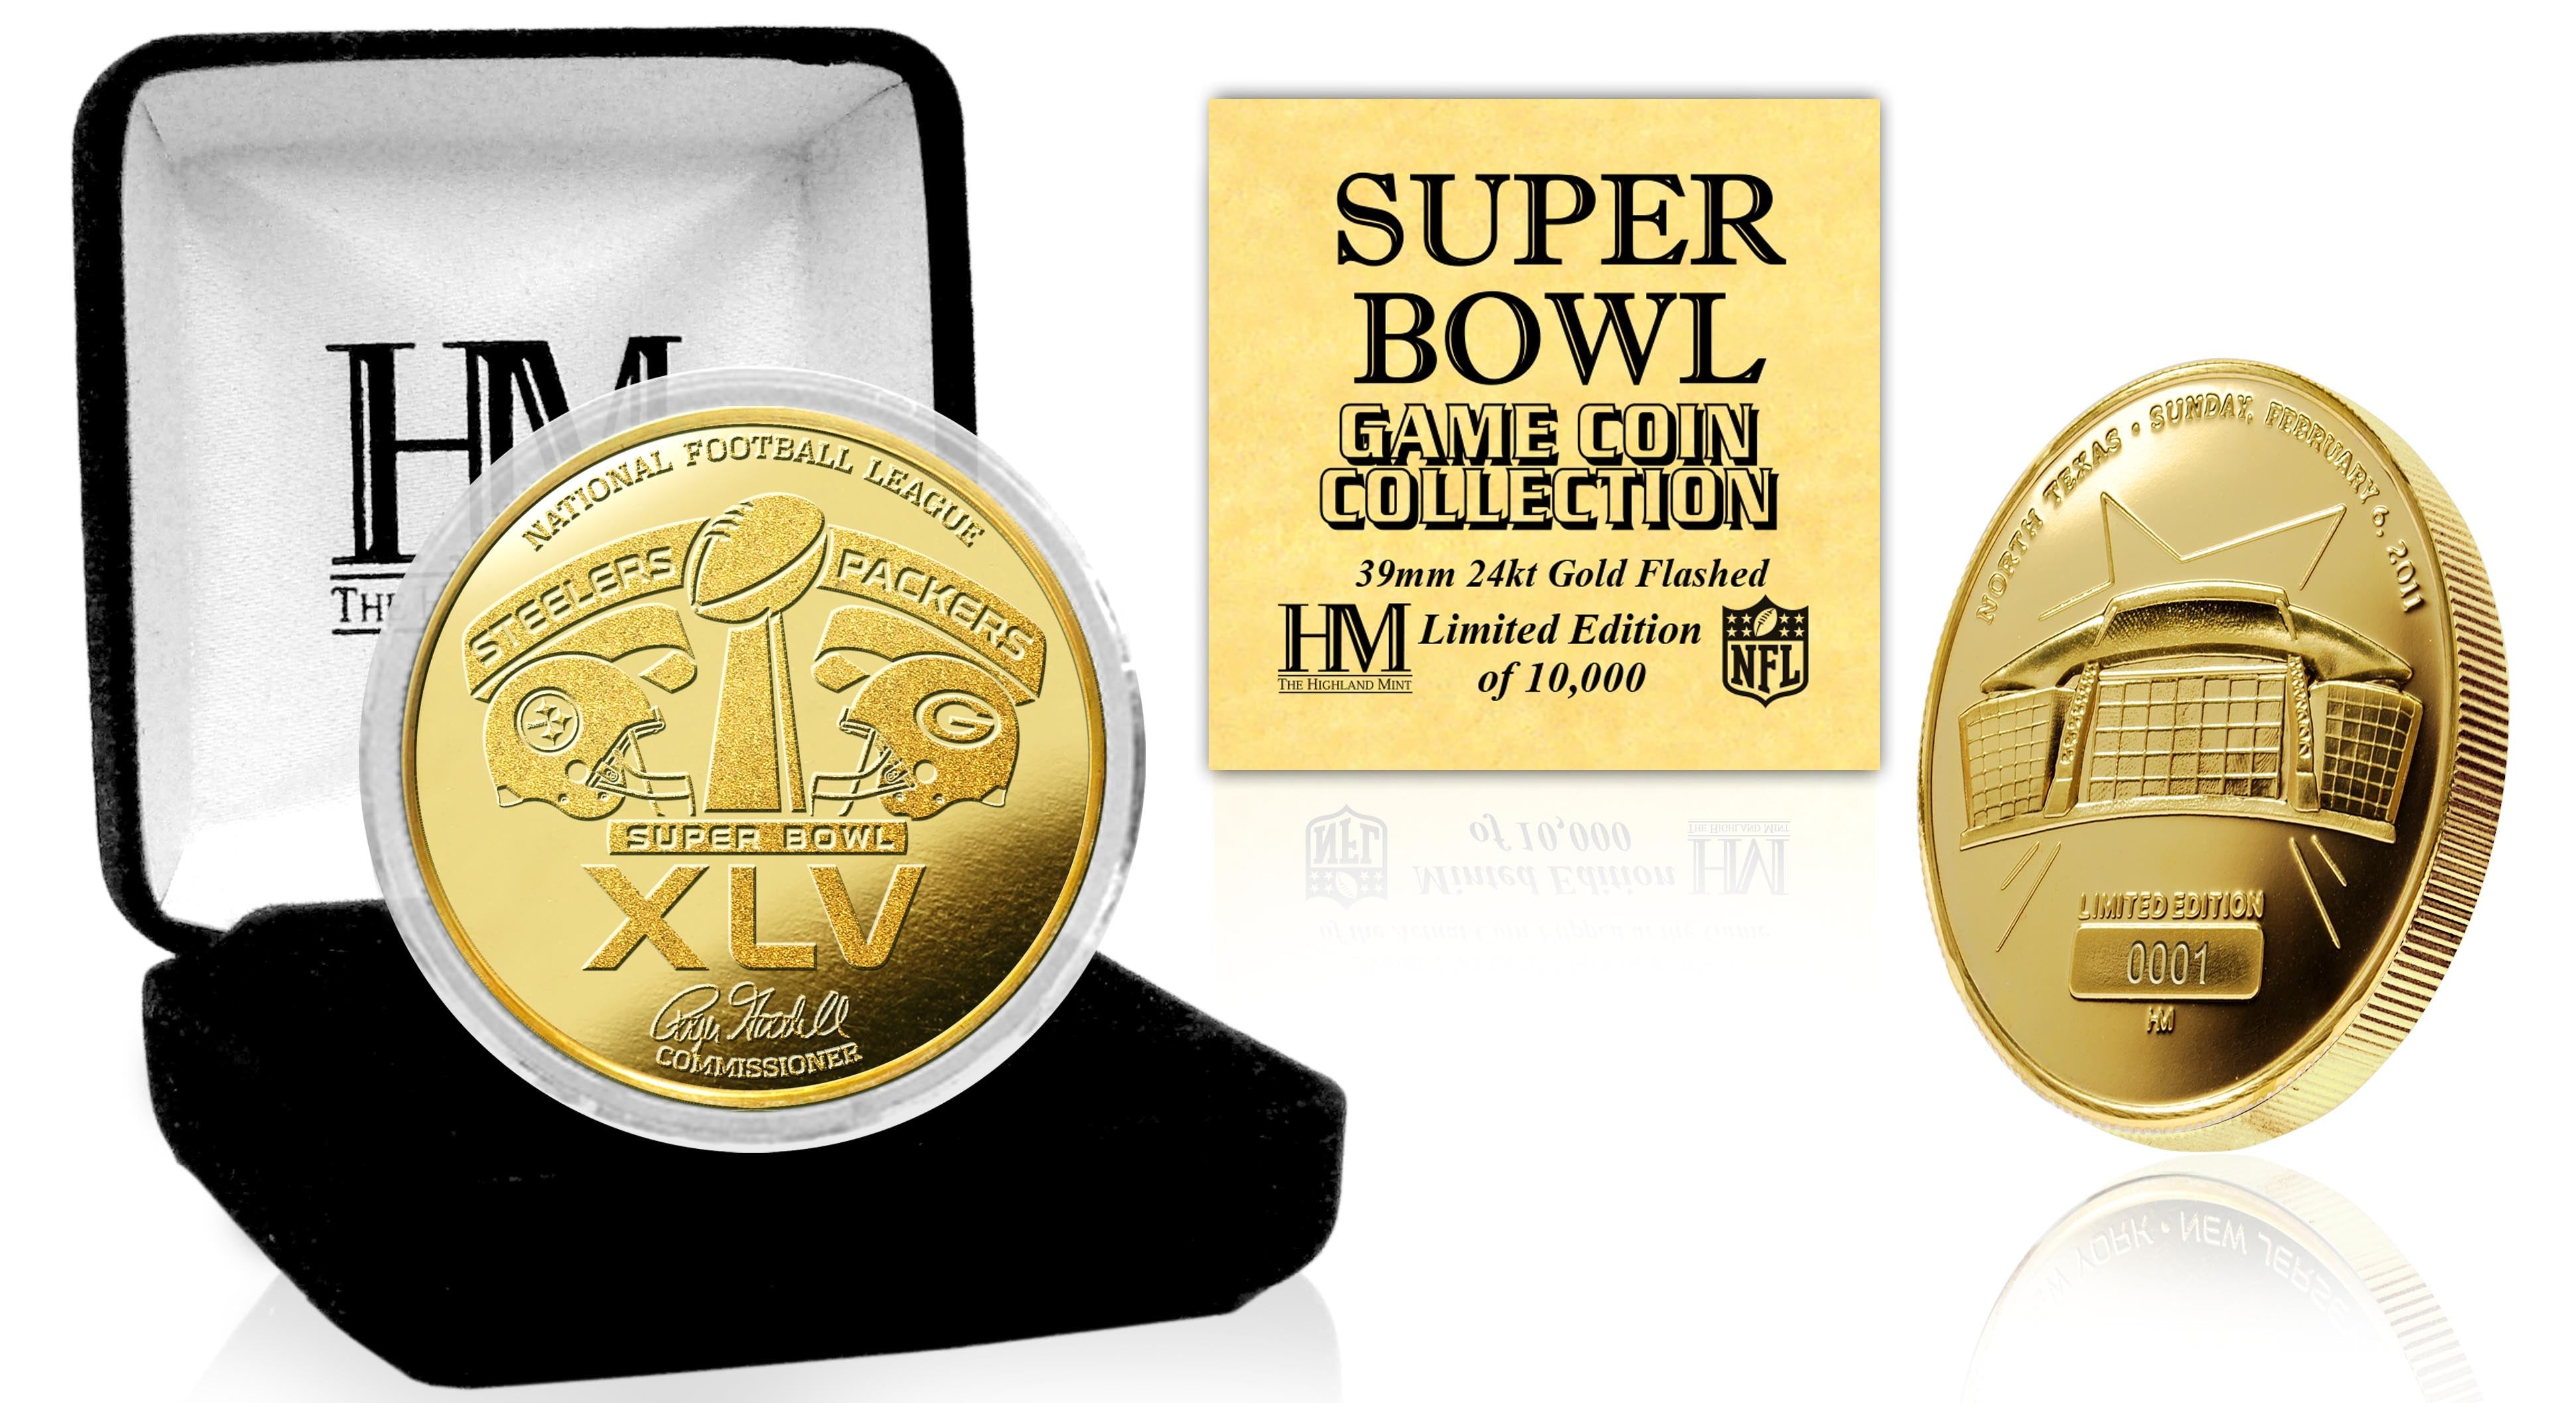 Super Bowl XLV 24KT Gold Flip Coin